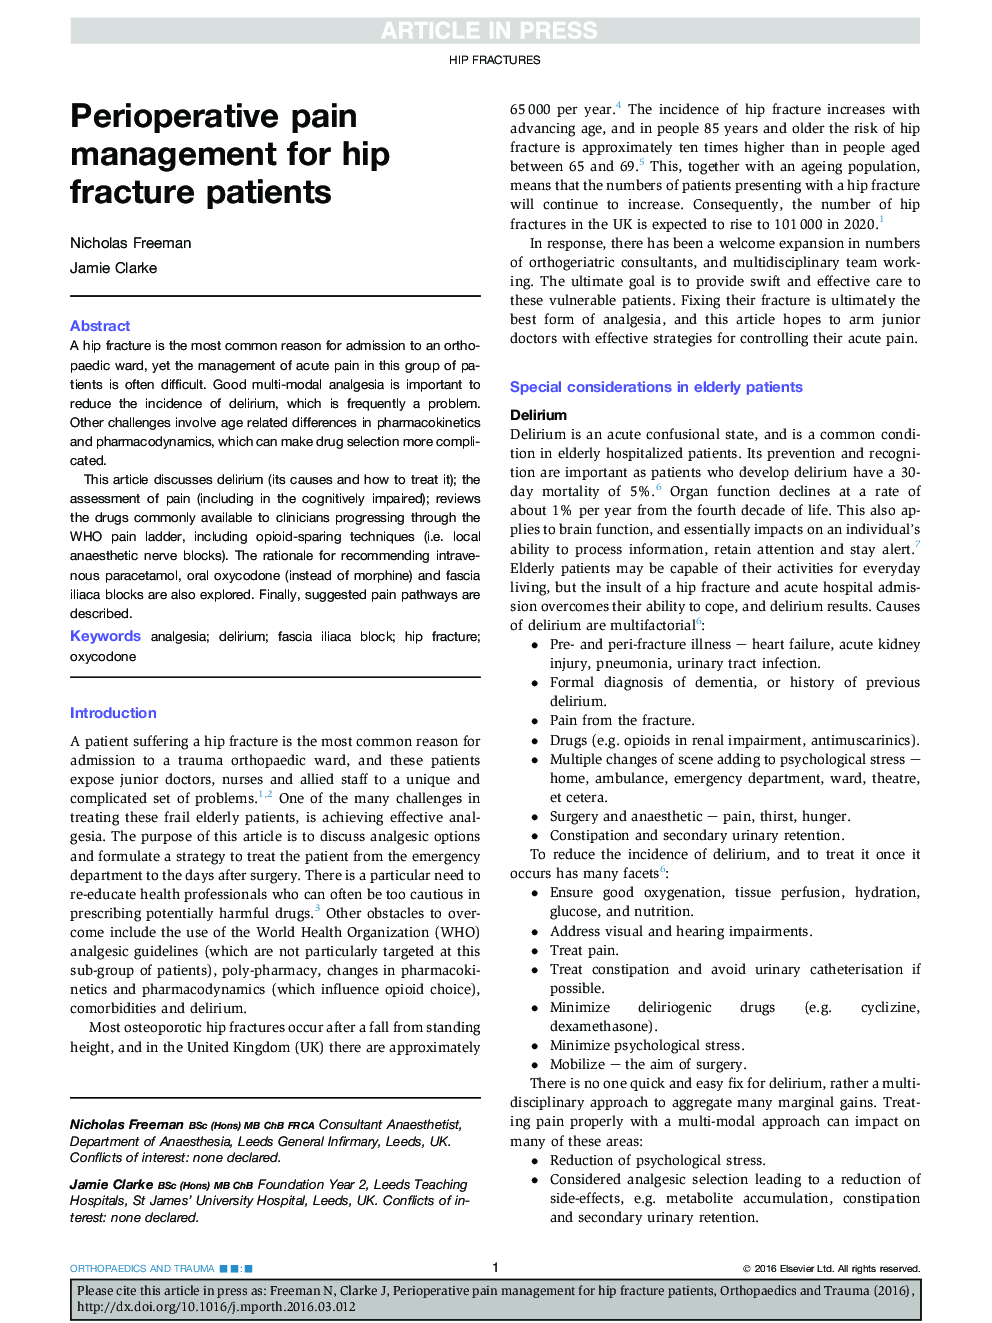 Perioperative pain management for hip fracture patients